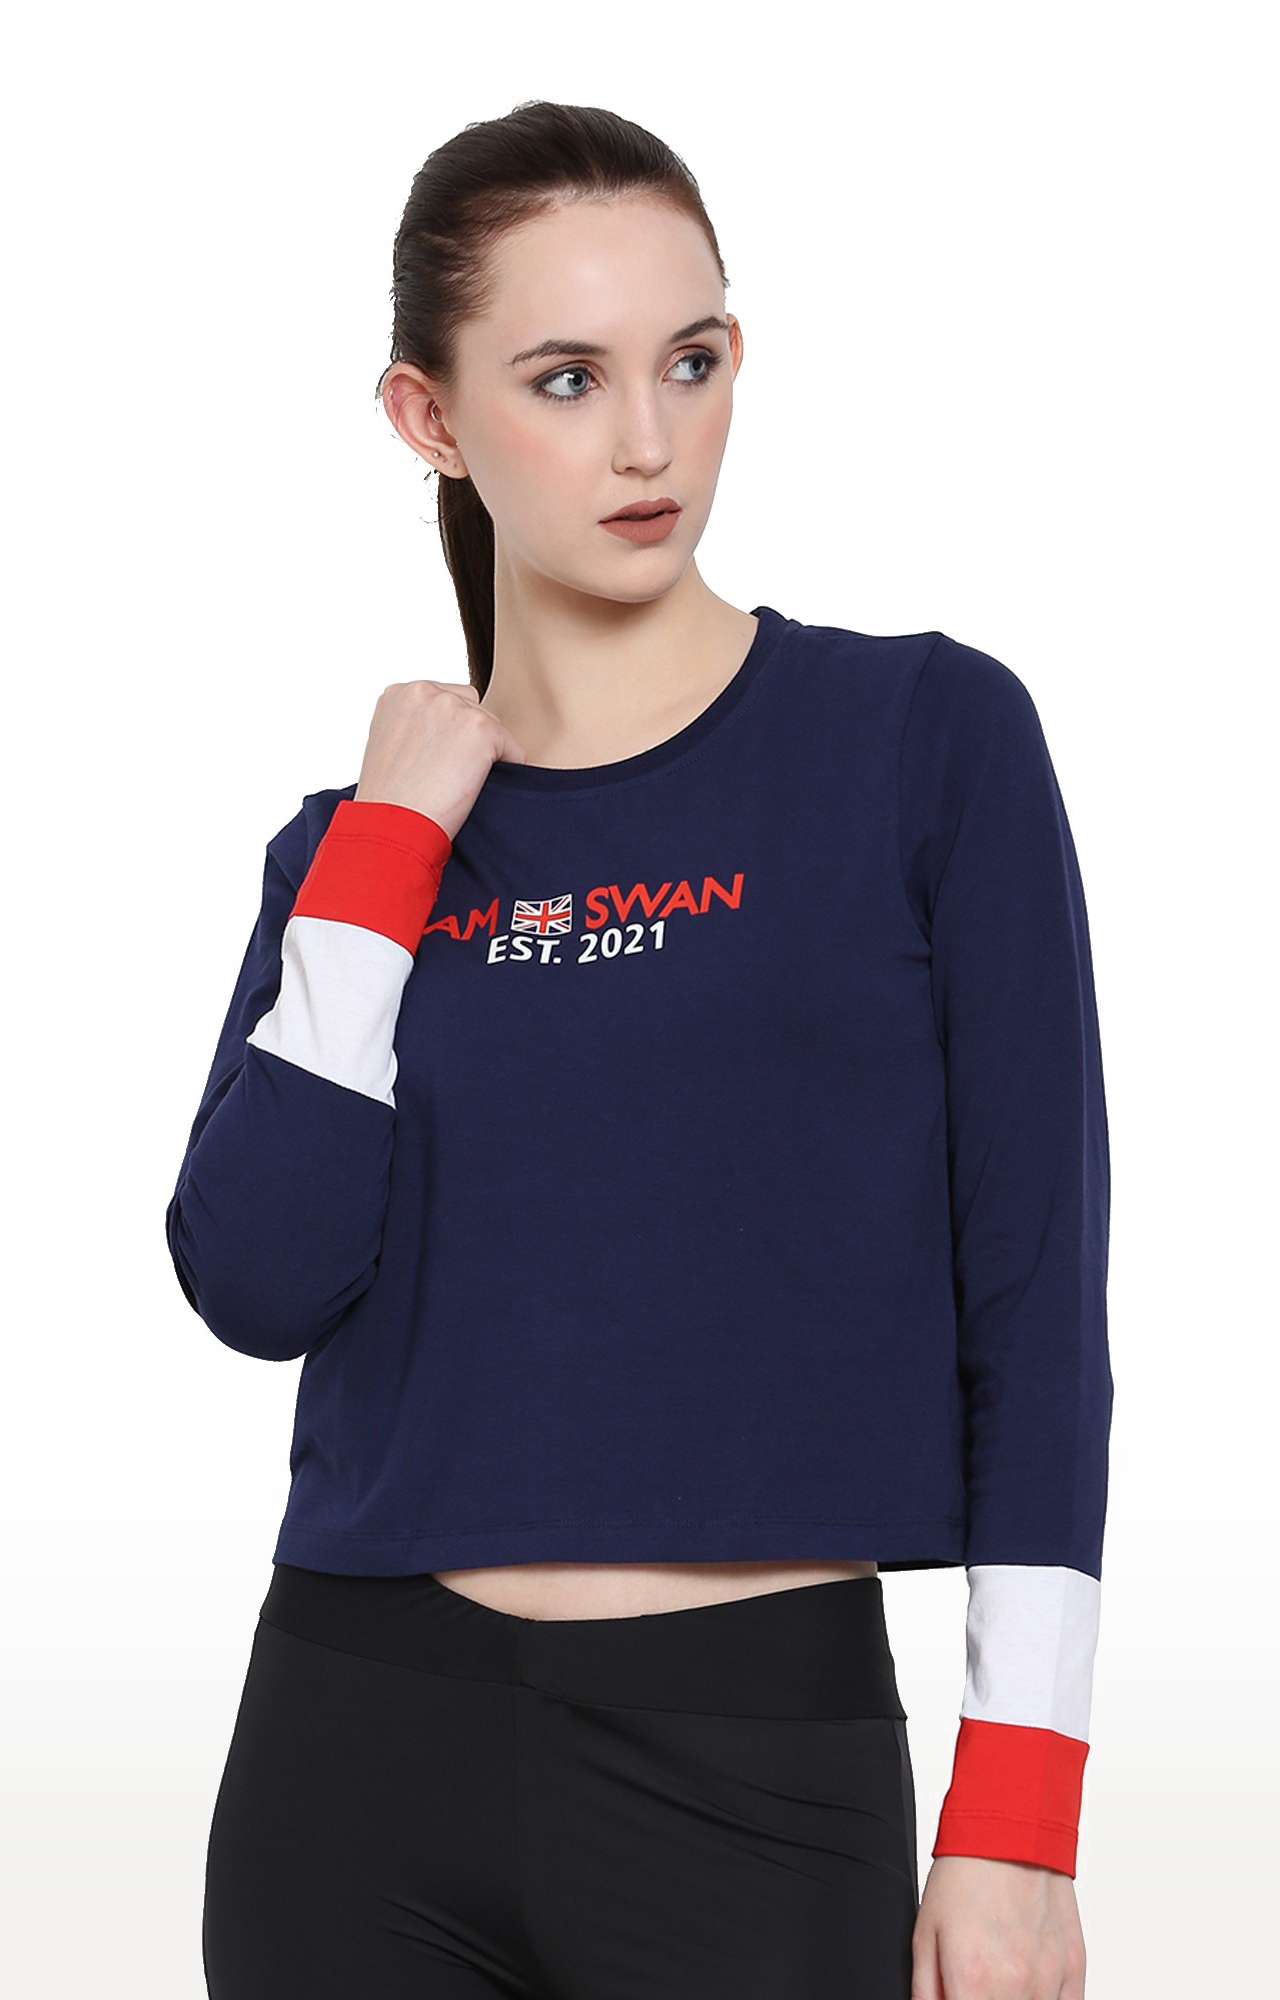 Women's Navy Cotton Typographic Printed Regular T-Shirt